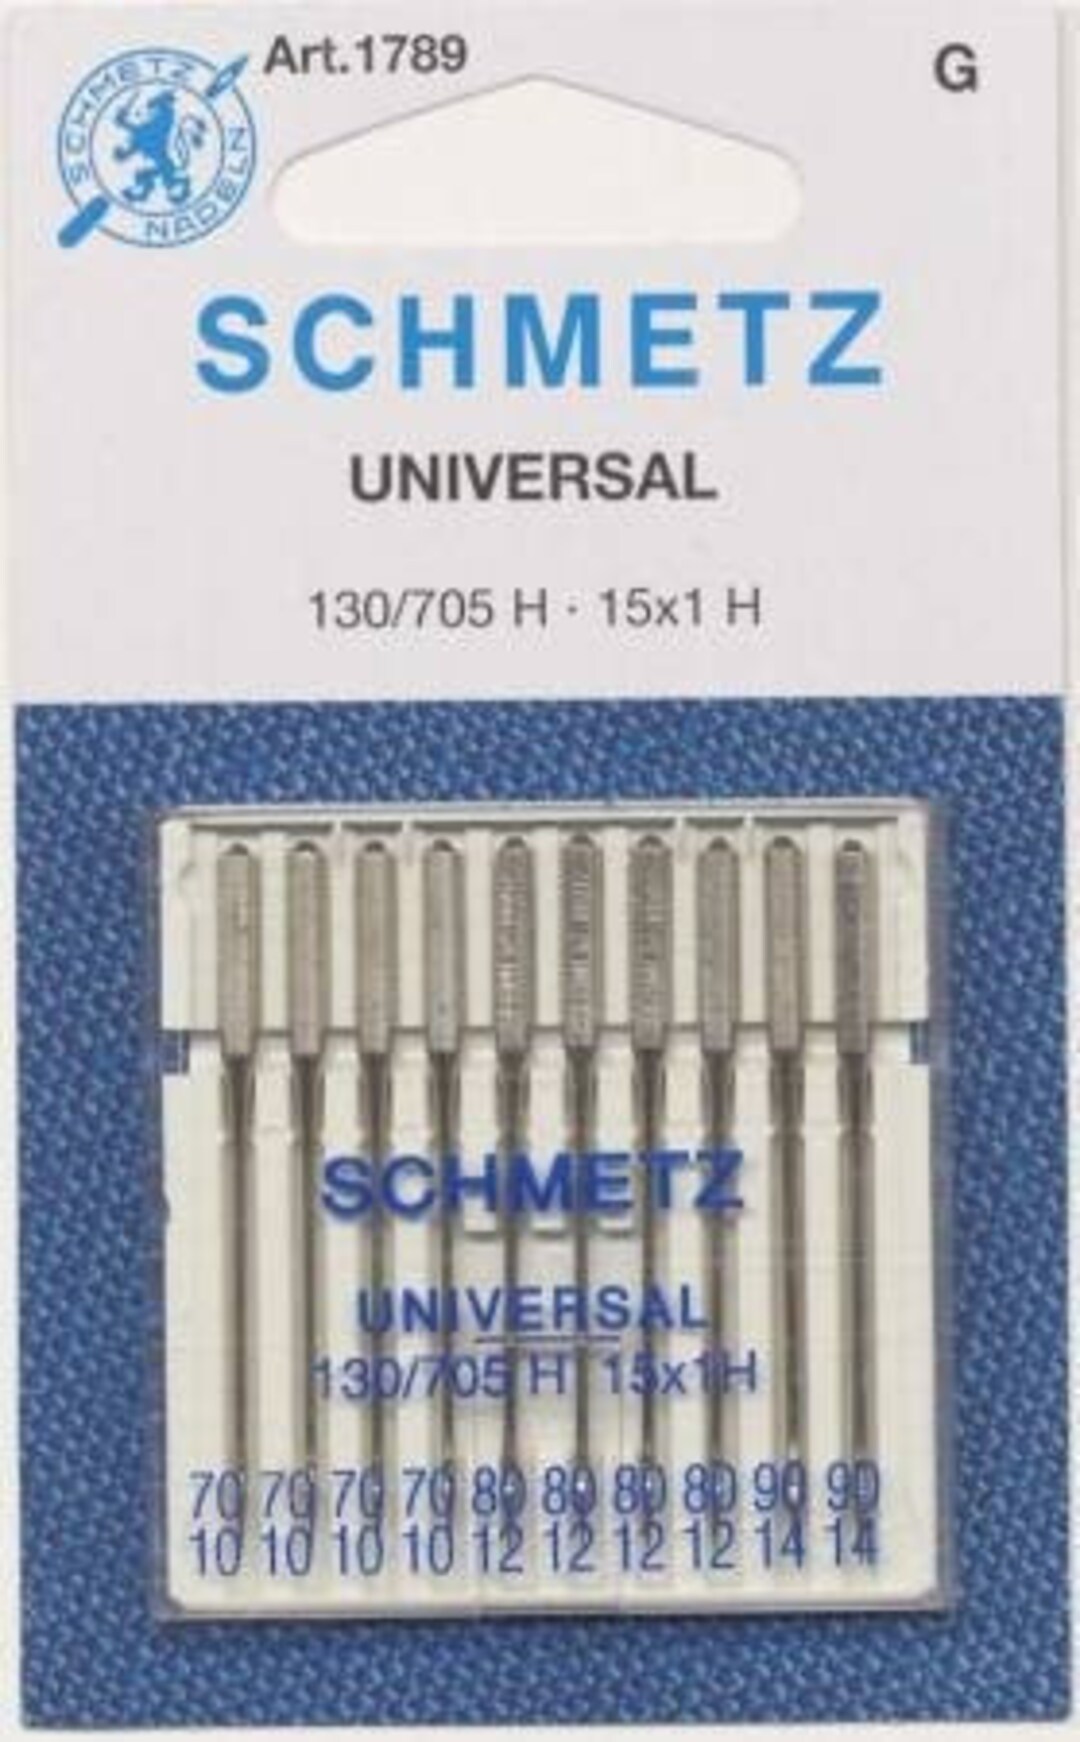 Schmetz Chrome Universal Machine Needles-Size 90/14 10/Pkg